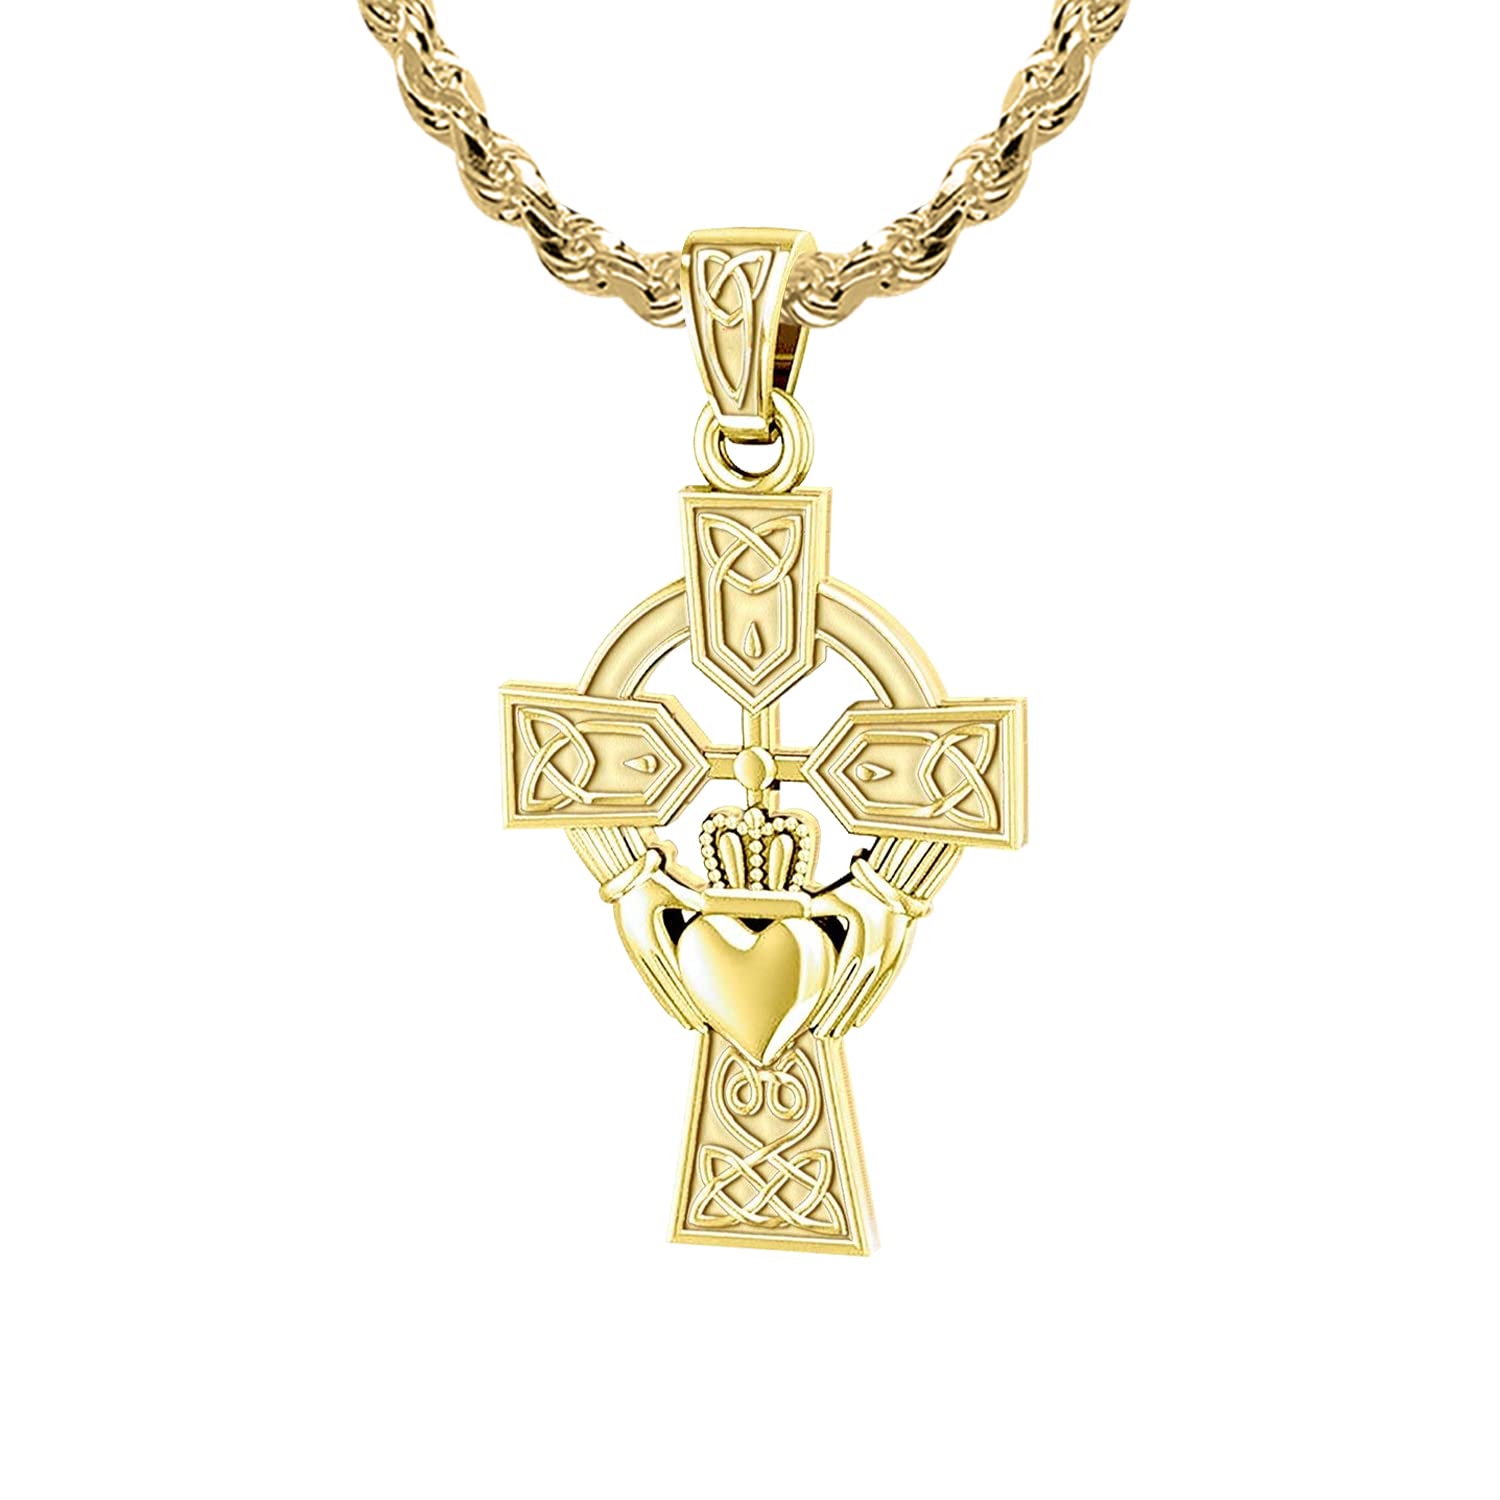 Irish Claddagh Necklace - Claddagh Cross Necklace